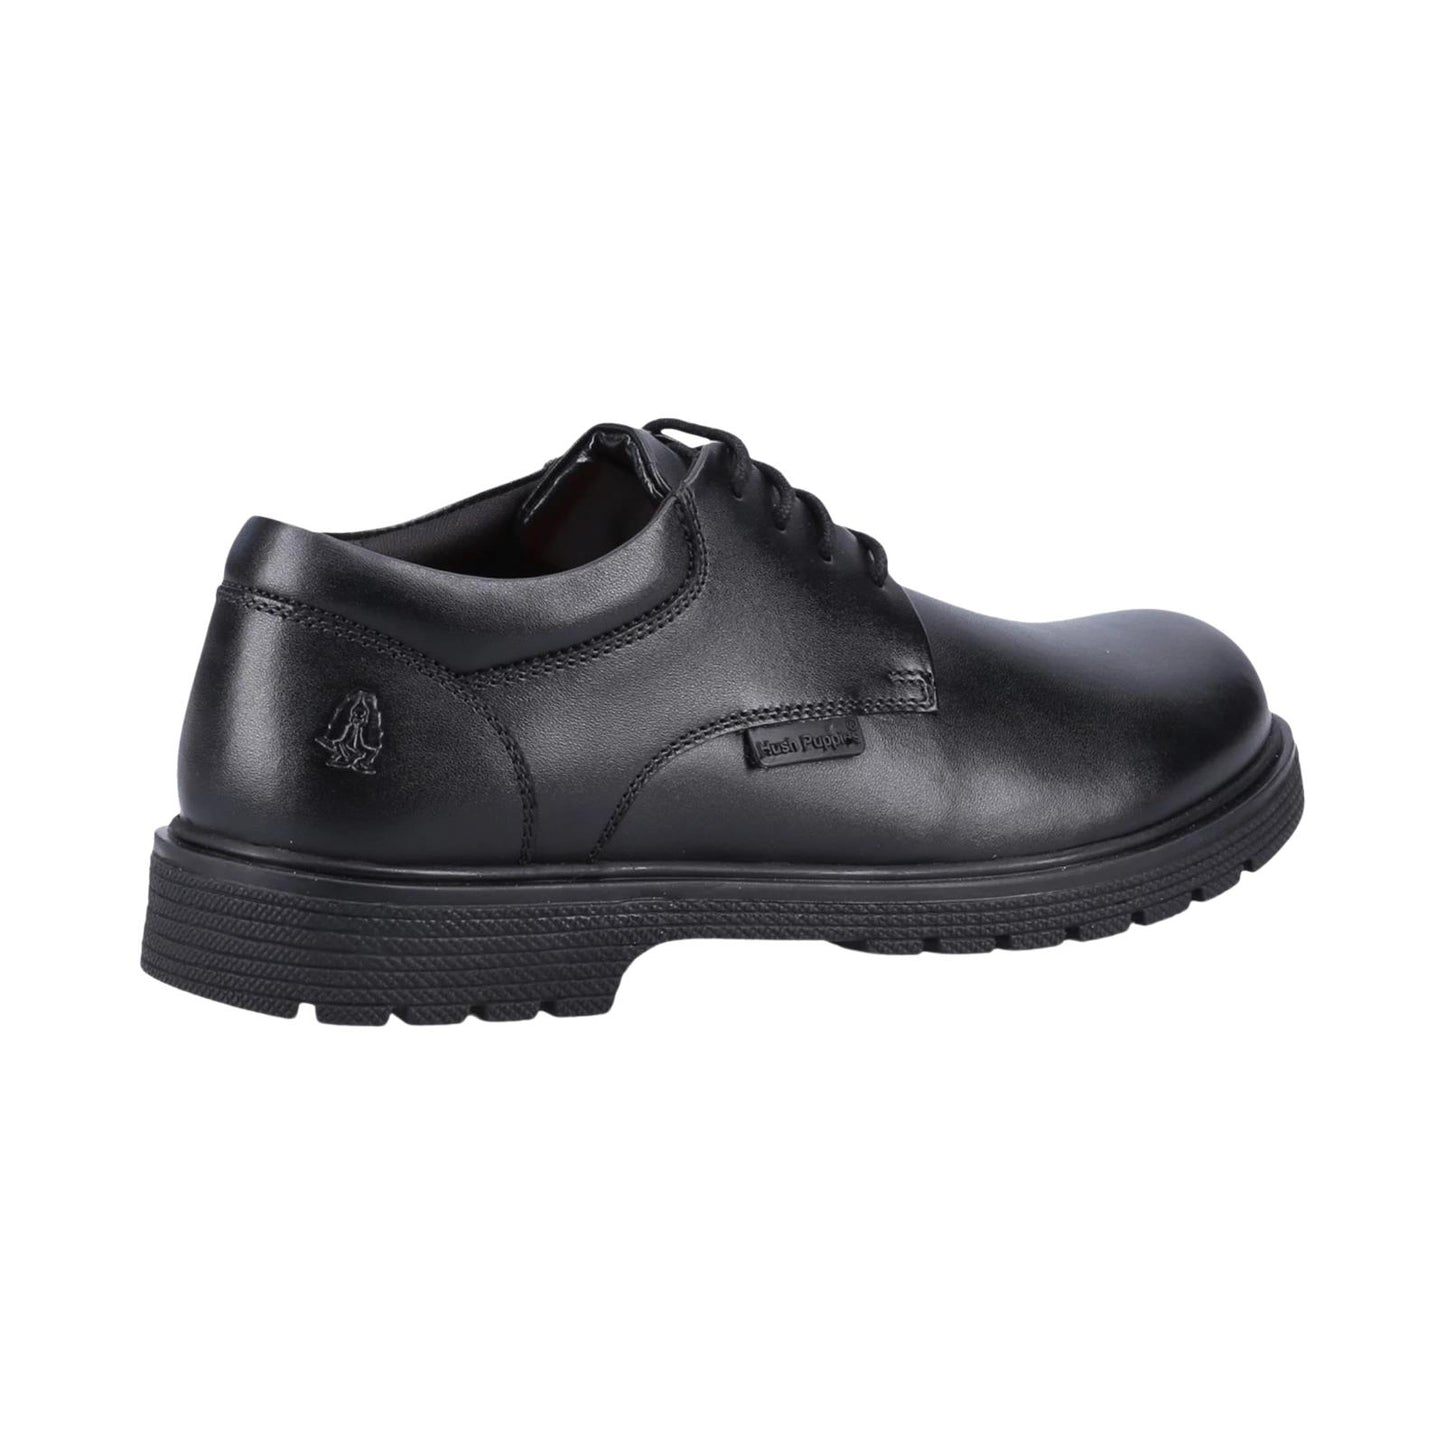 Hush Puppies Boys Tristan Snr Black Leather Lace Up School Shoes